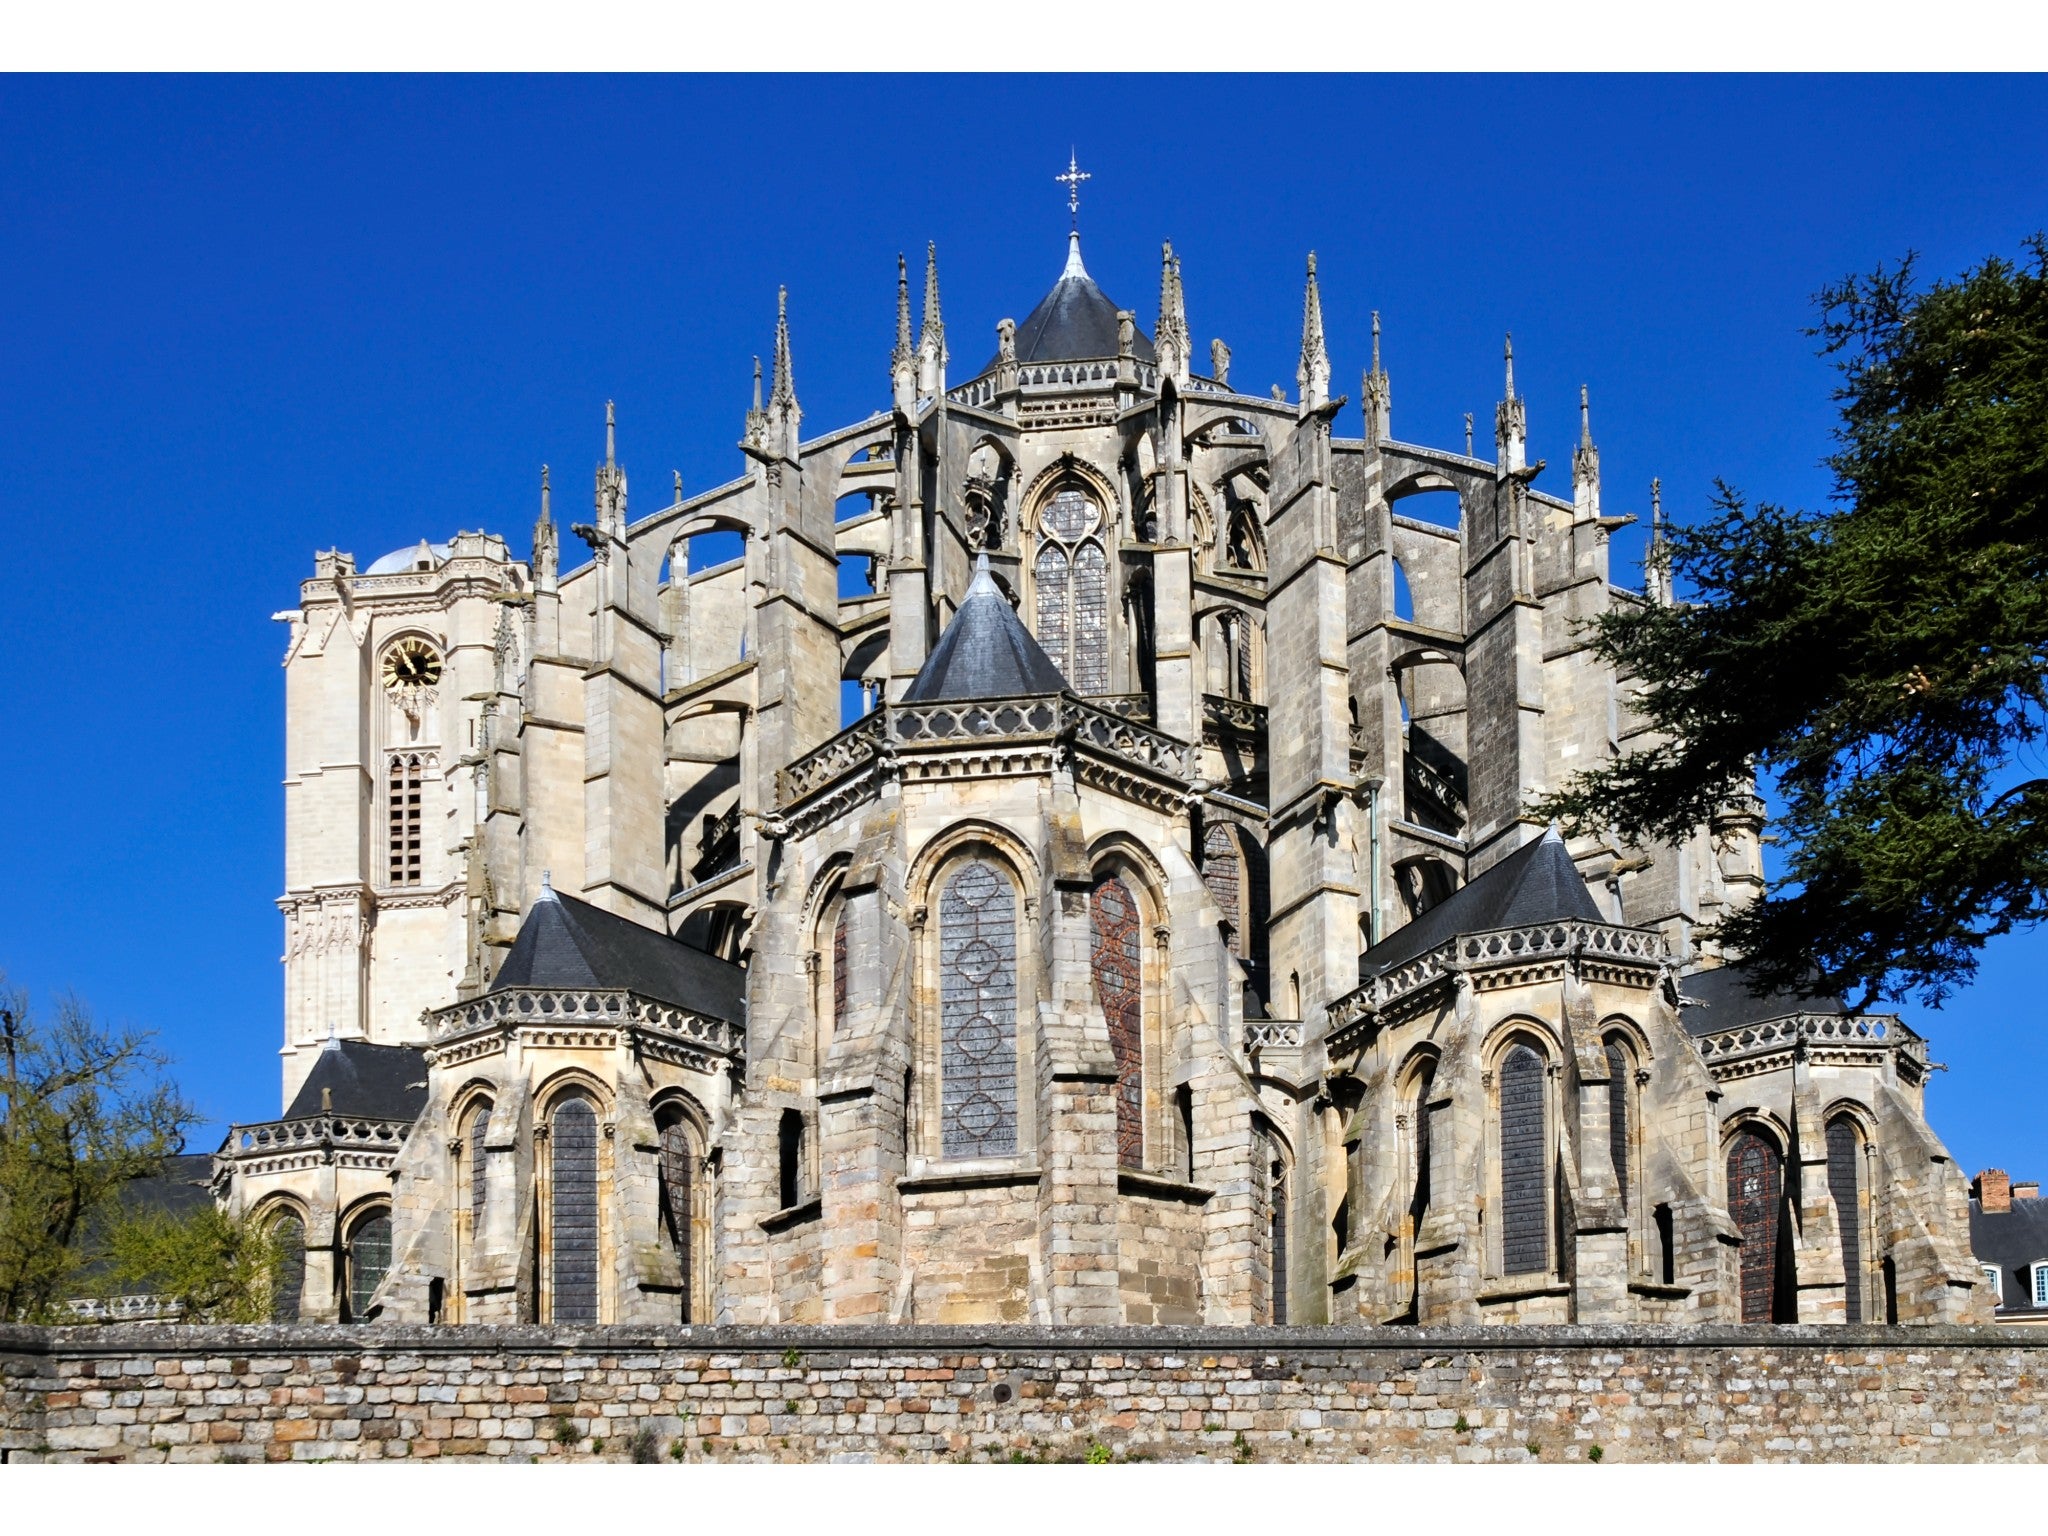 Saint-Julien Cathedral features Gothic and Romanesque design details